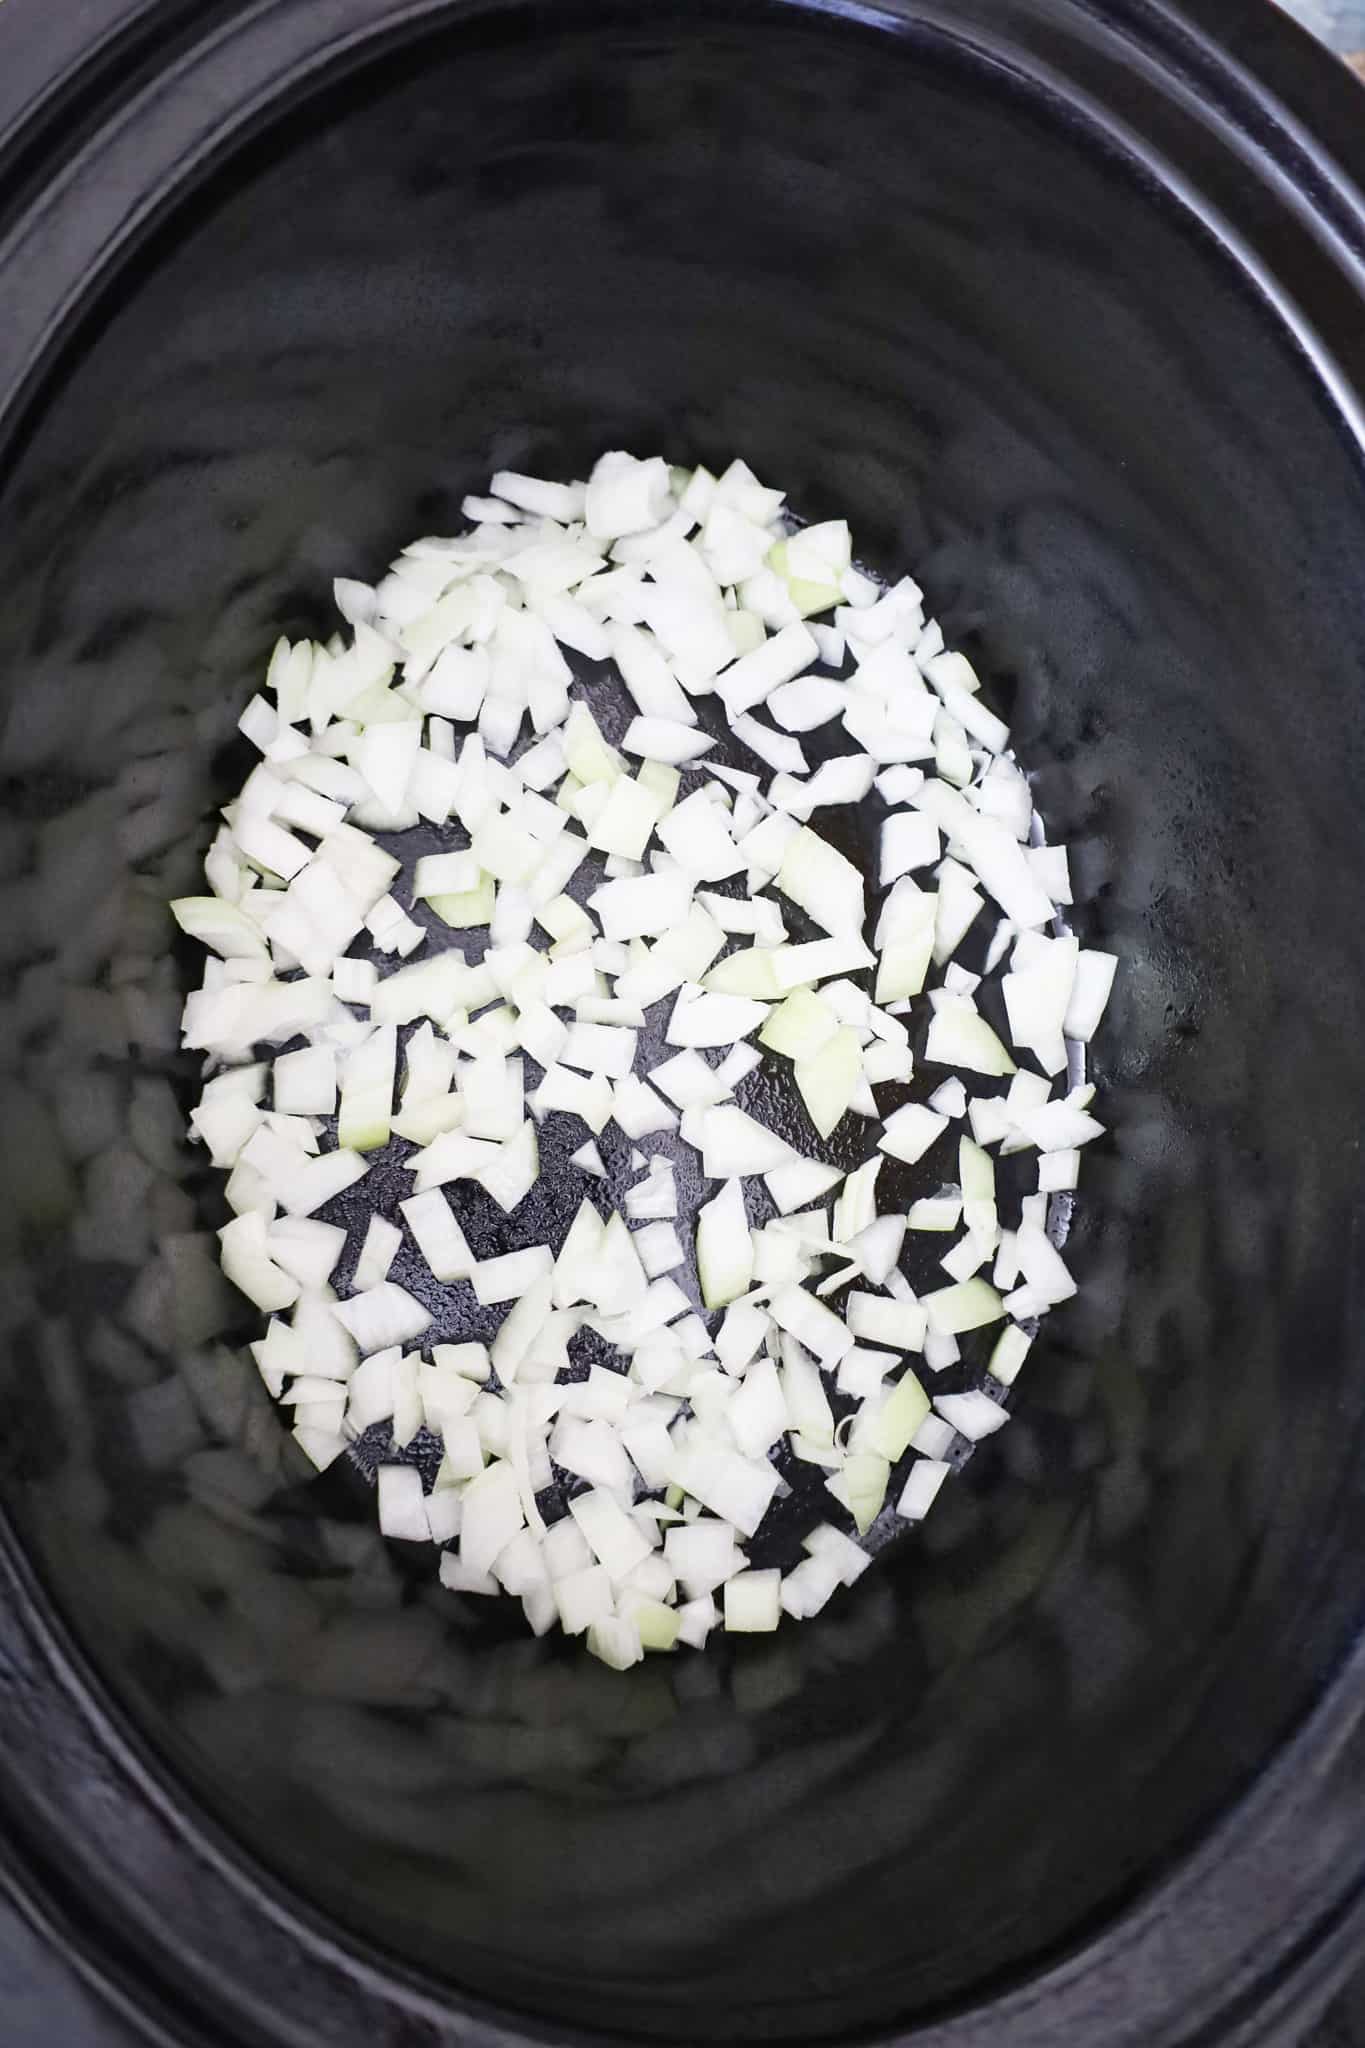 diced onions in a crock pot